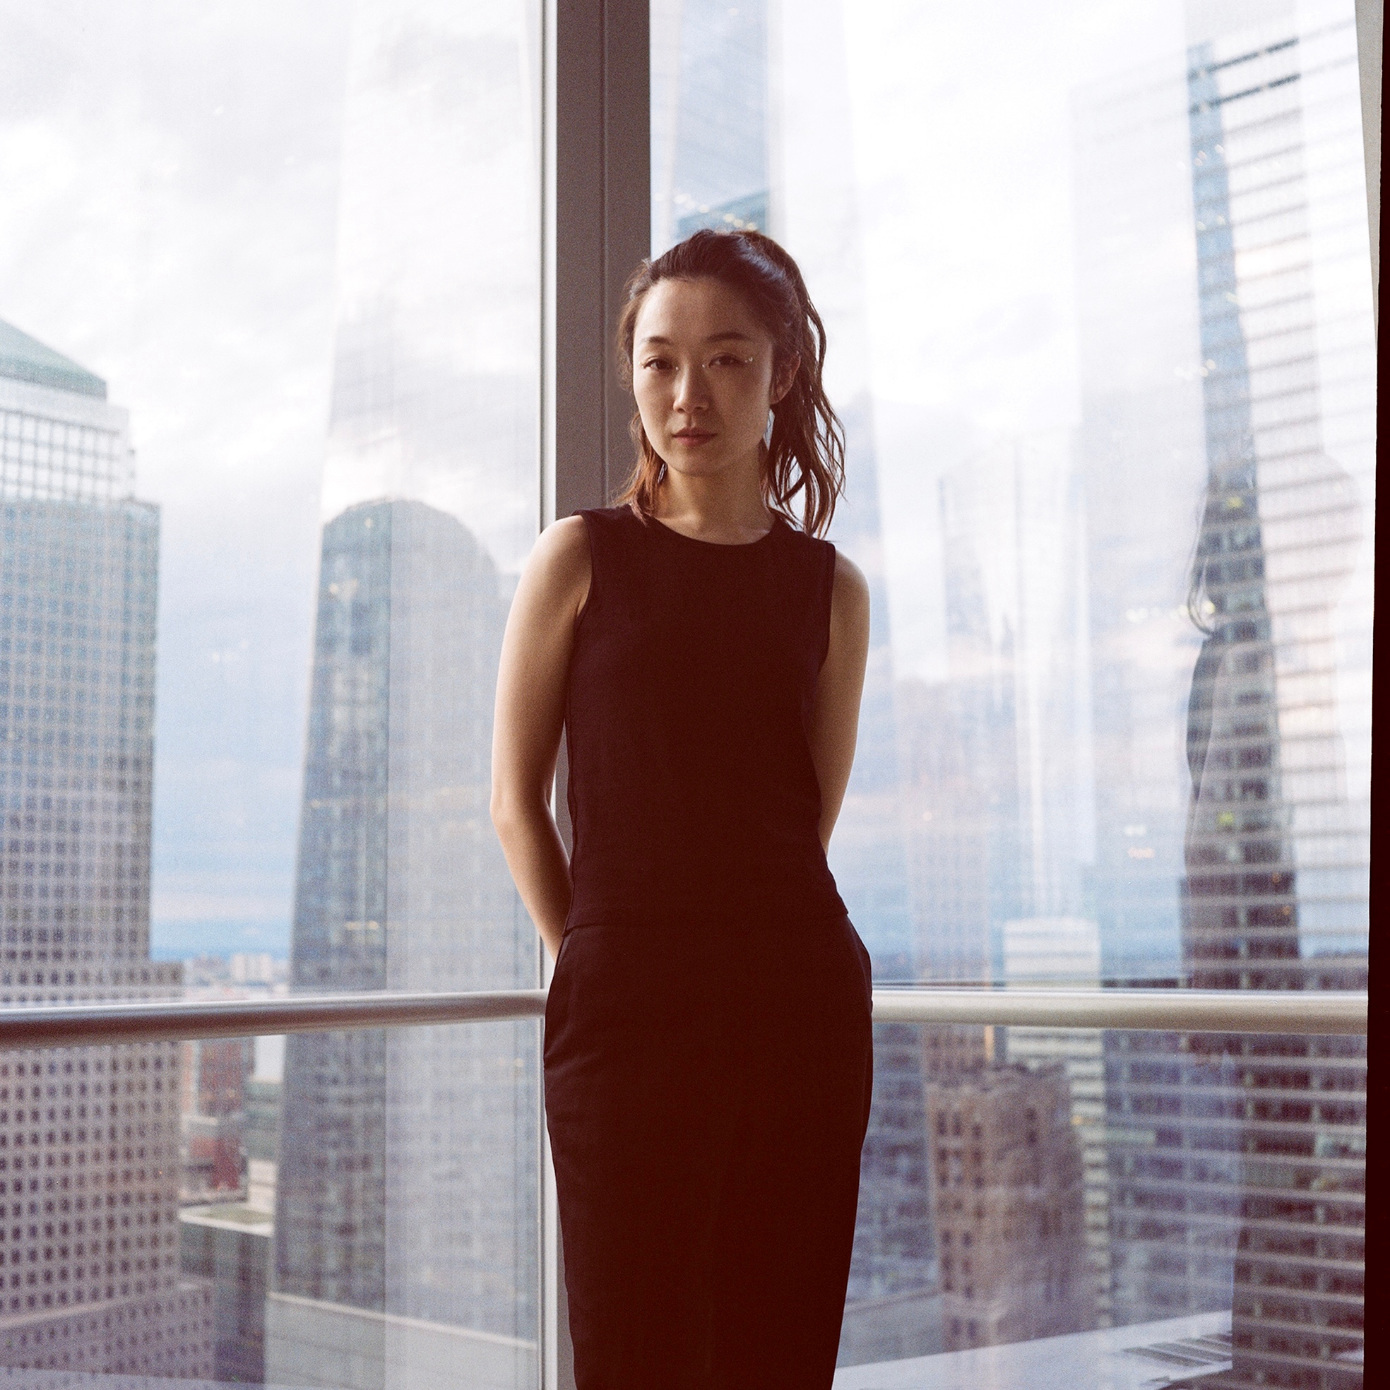 woman standing in skyscraper window